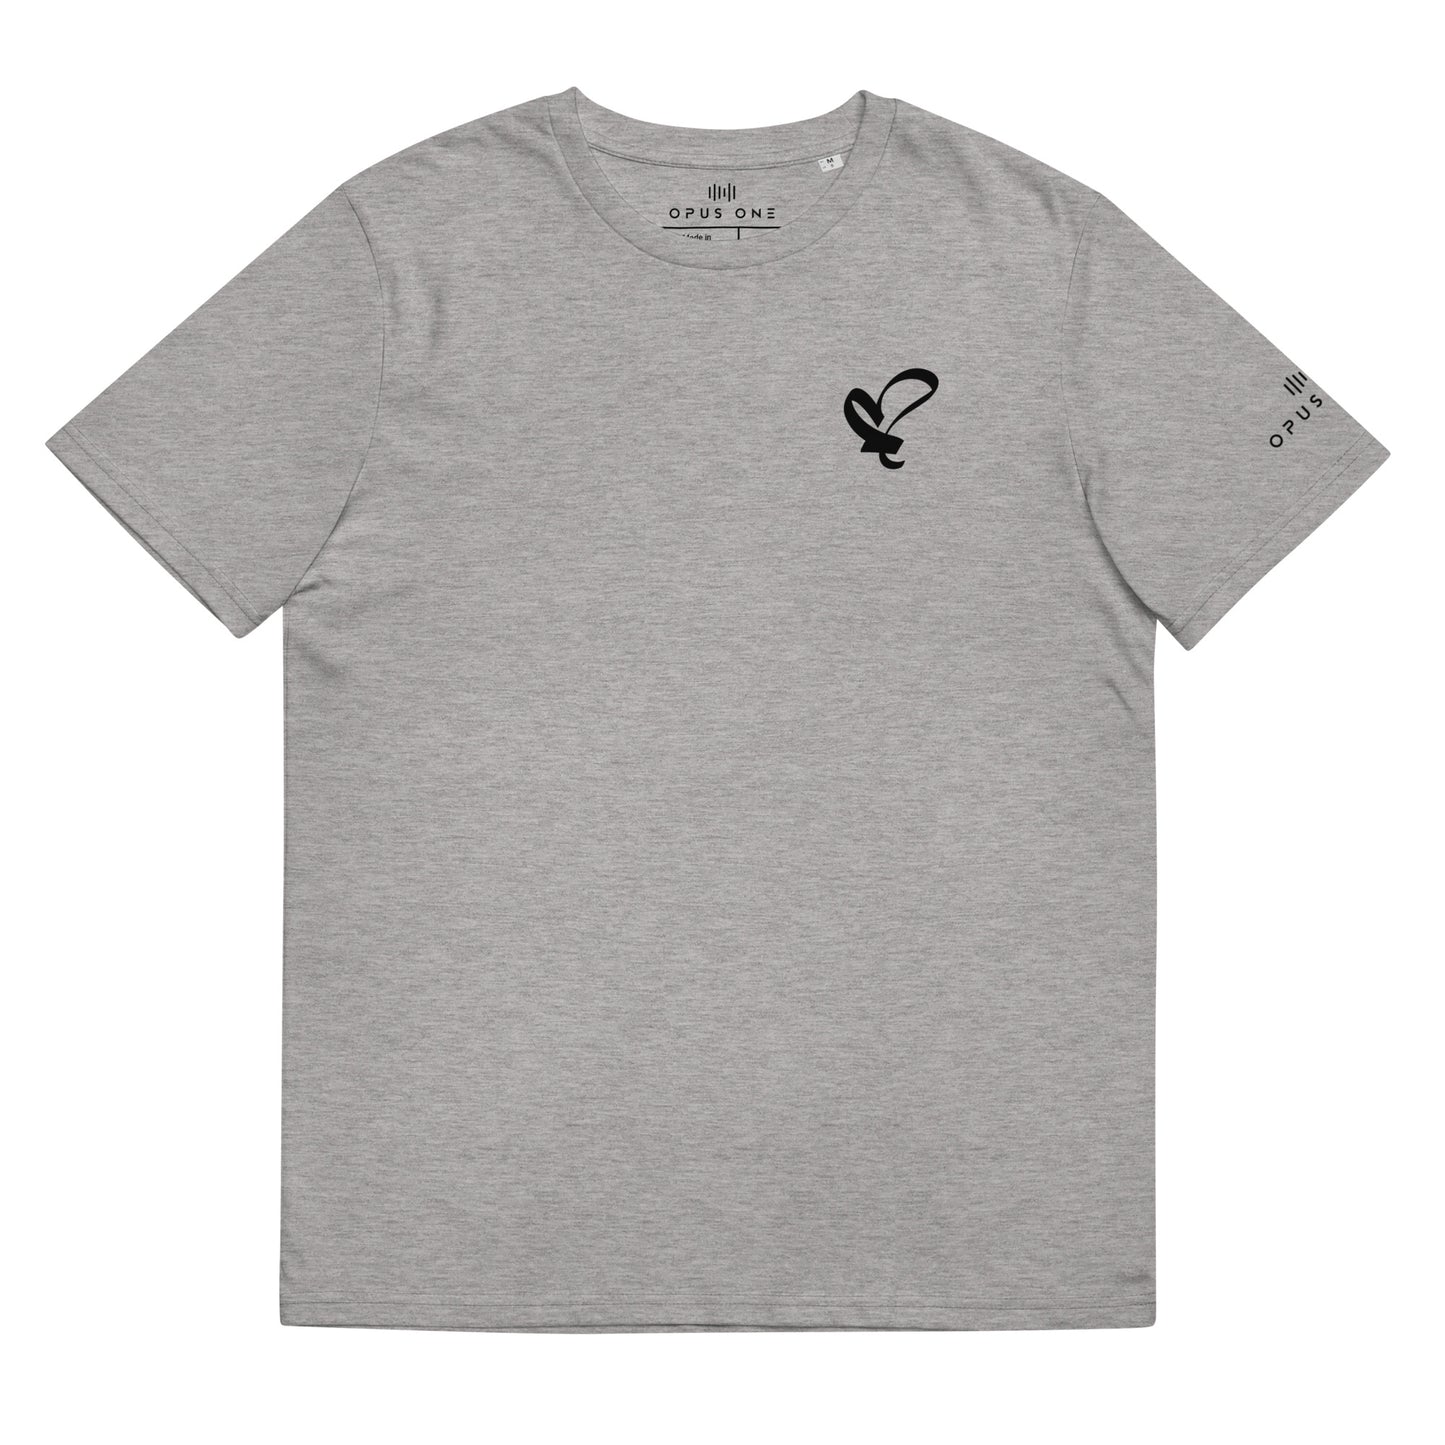 Ltd (Rebel v1) Unisex organic cotton t-shirt (Black Text)